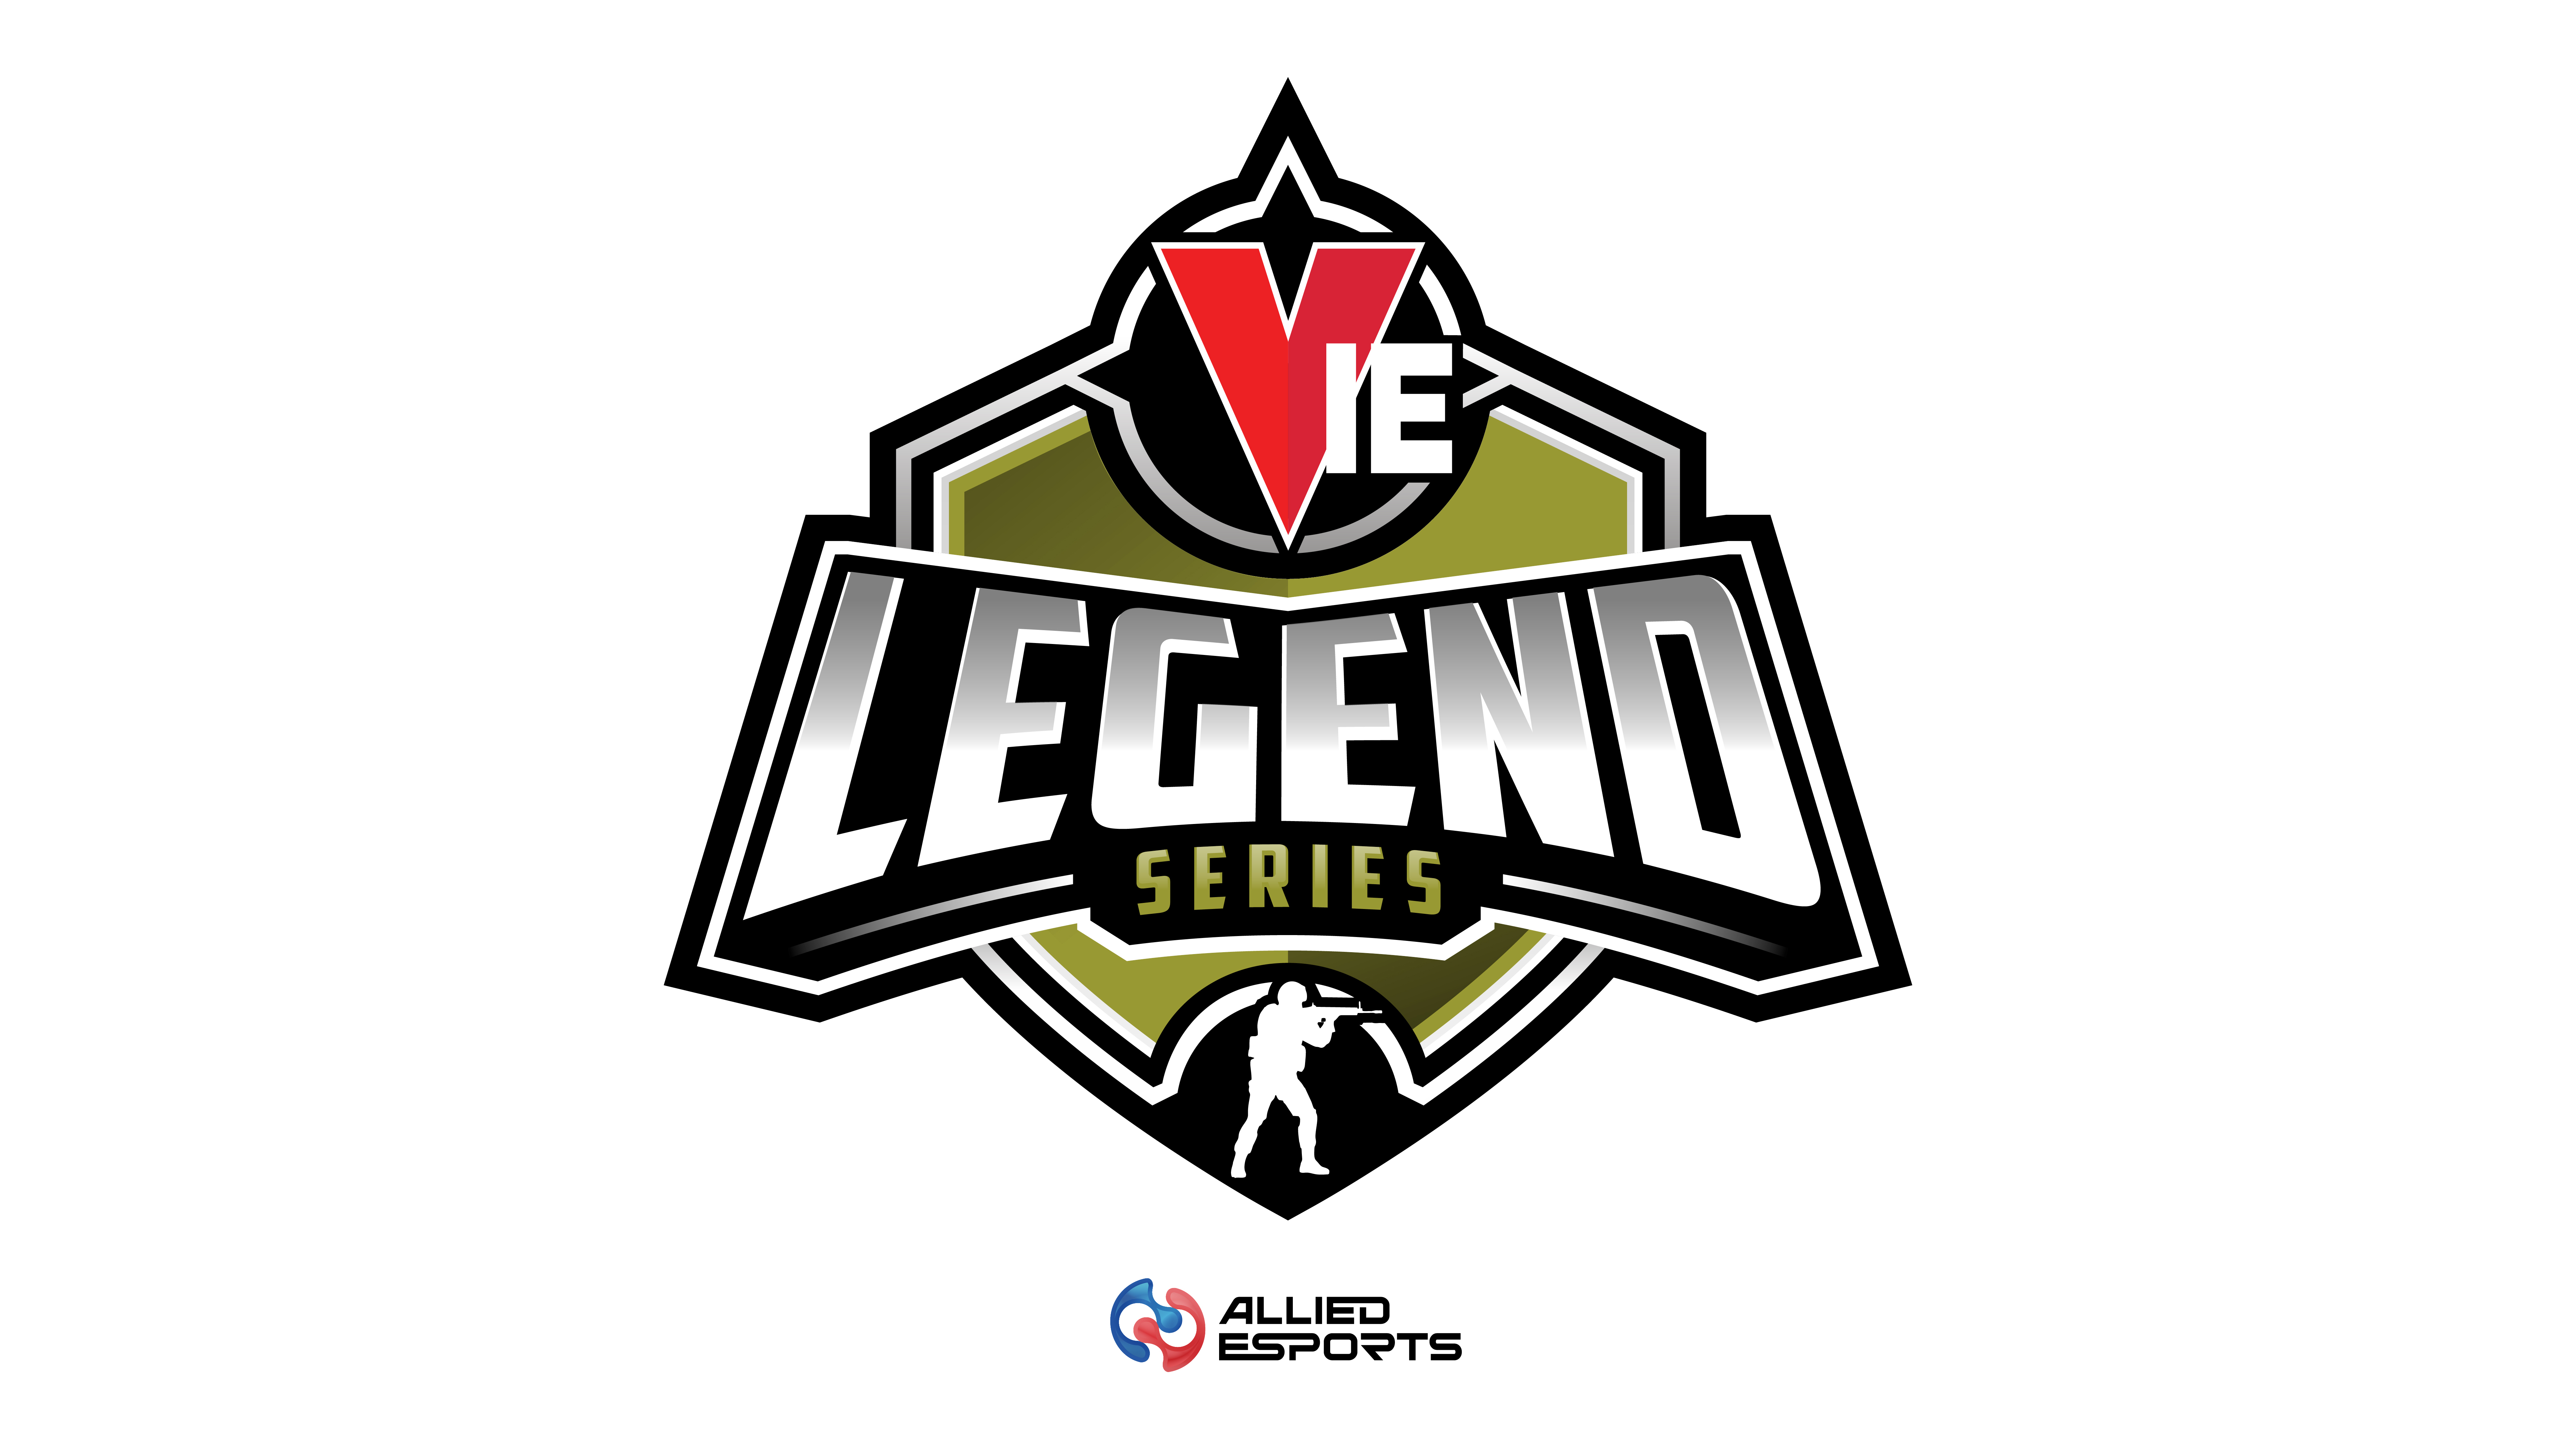 Allied Esports VIE.gg CSGO Legend Series Reaches 1.7 Million Unique Viewers Business Wire